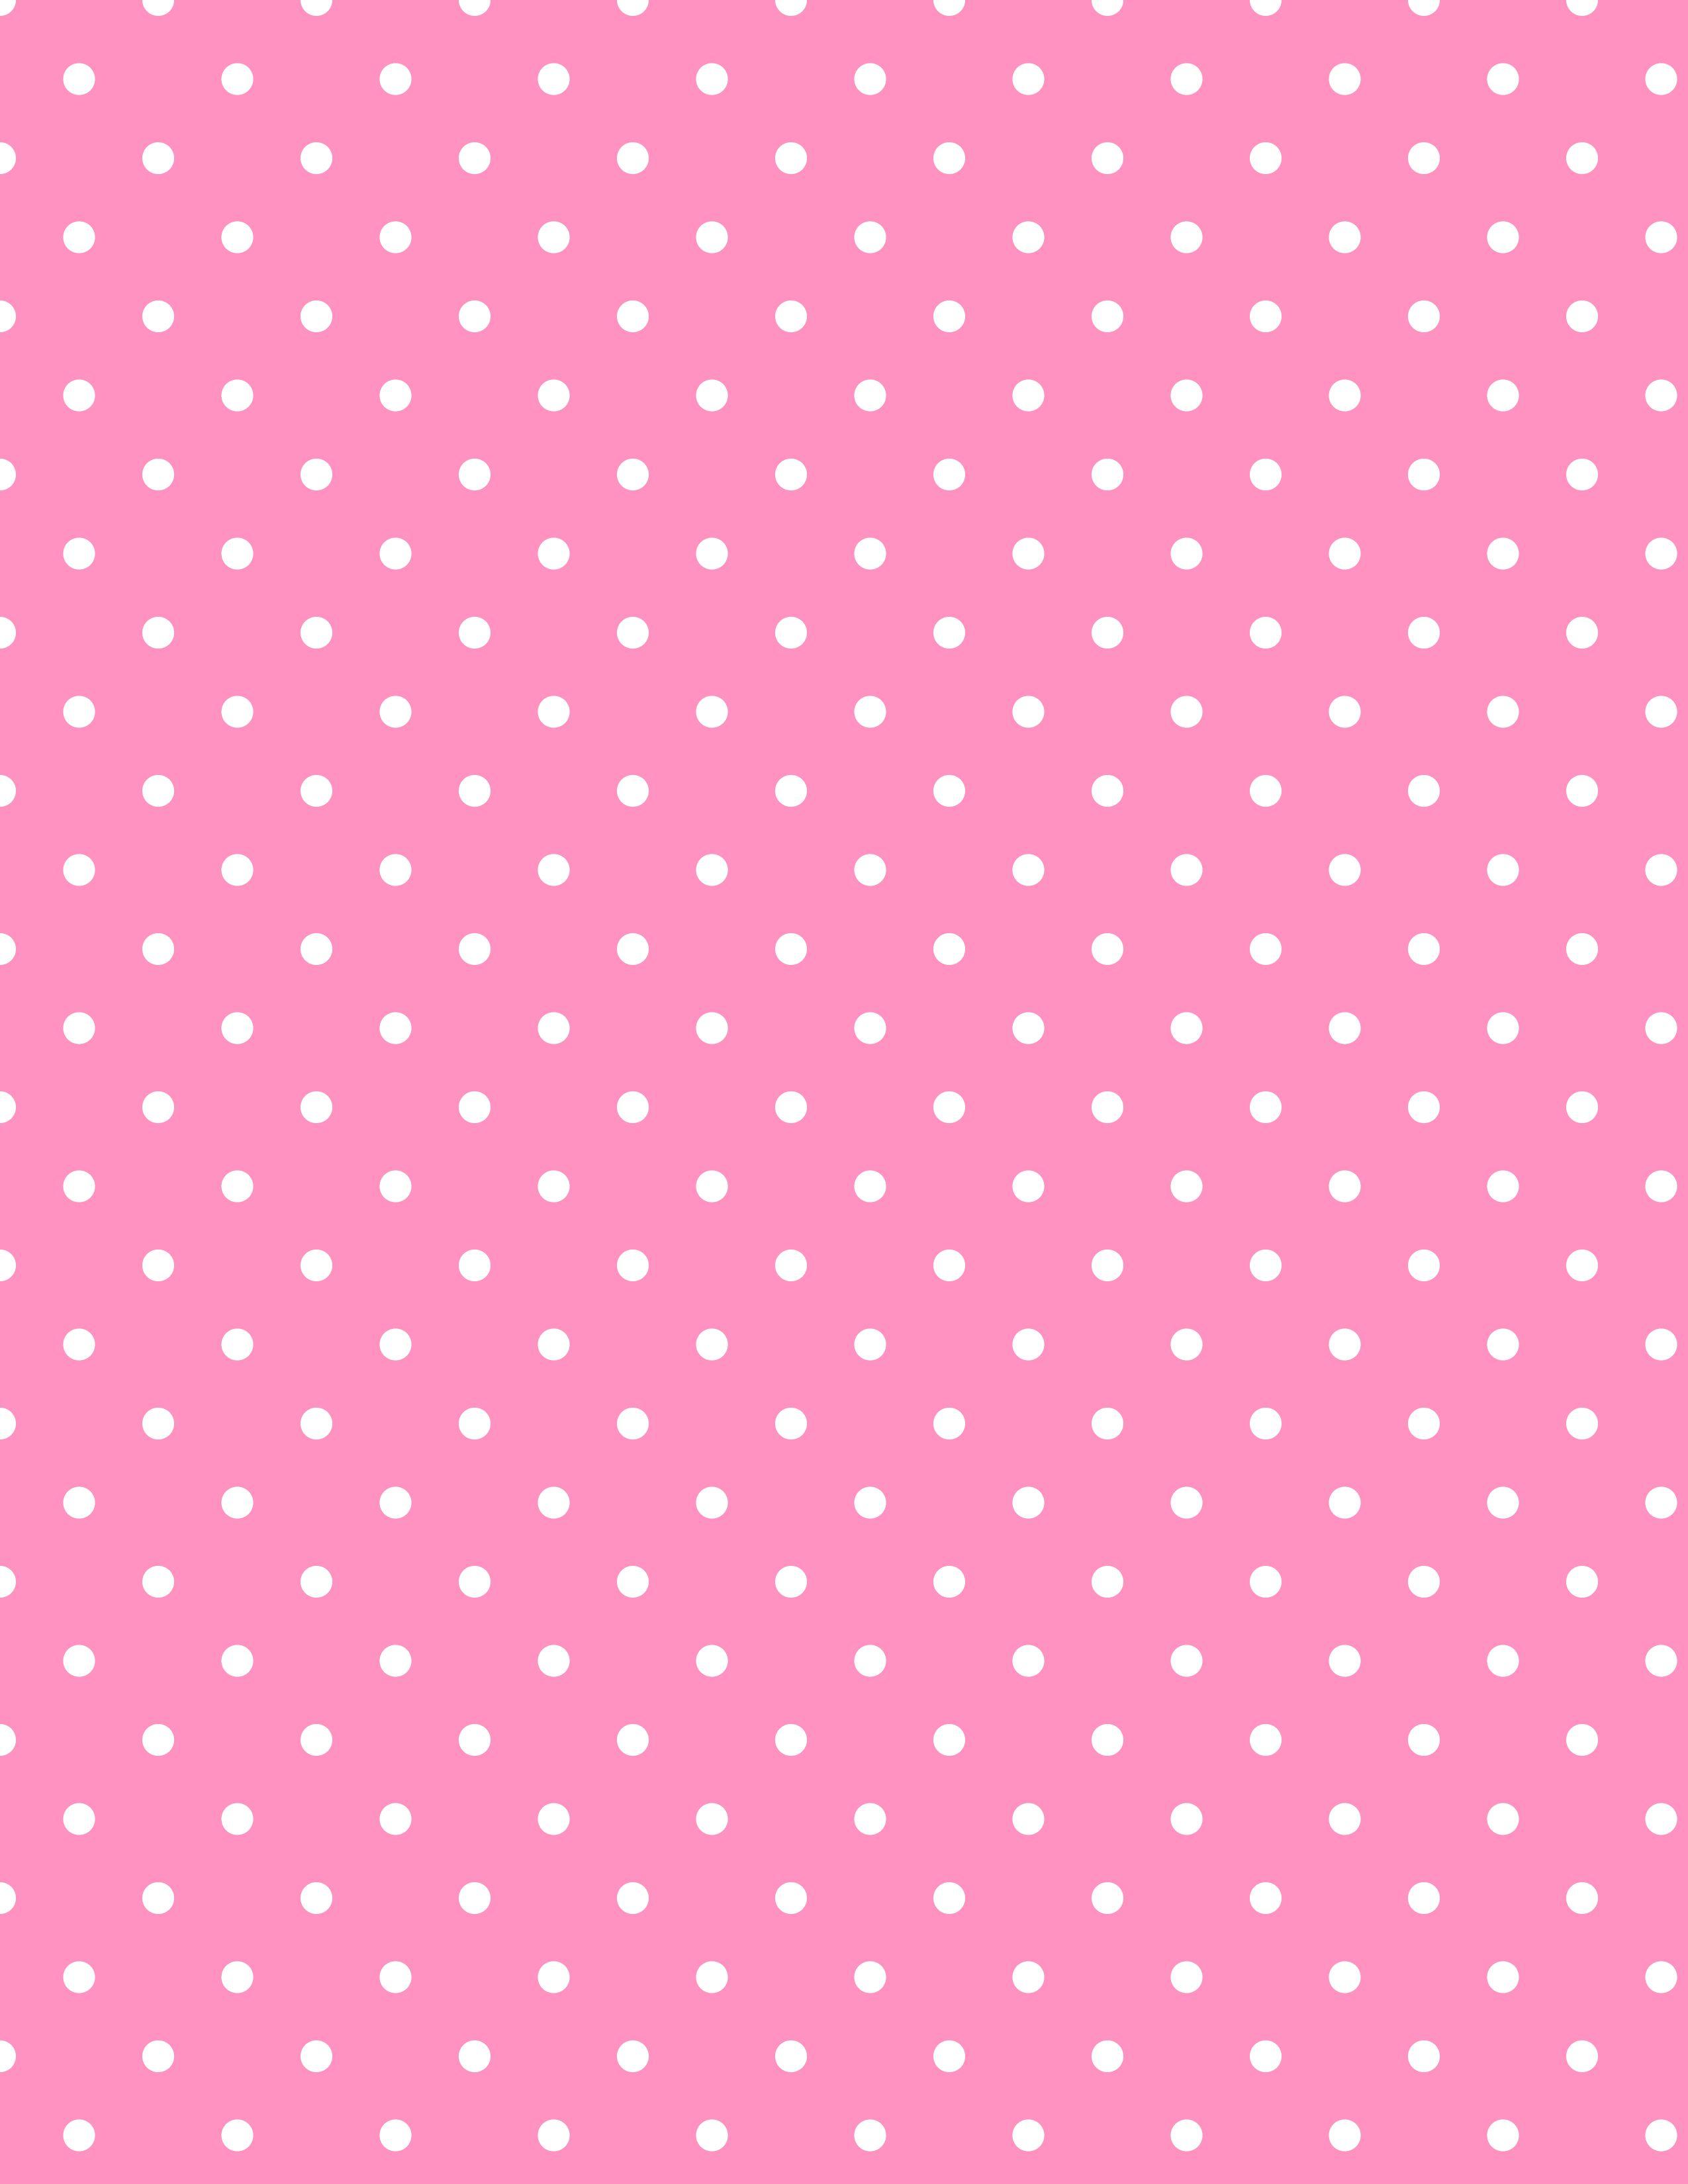 Polkadot Soft Pink Backgrounds Wallpaper Cave